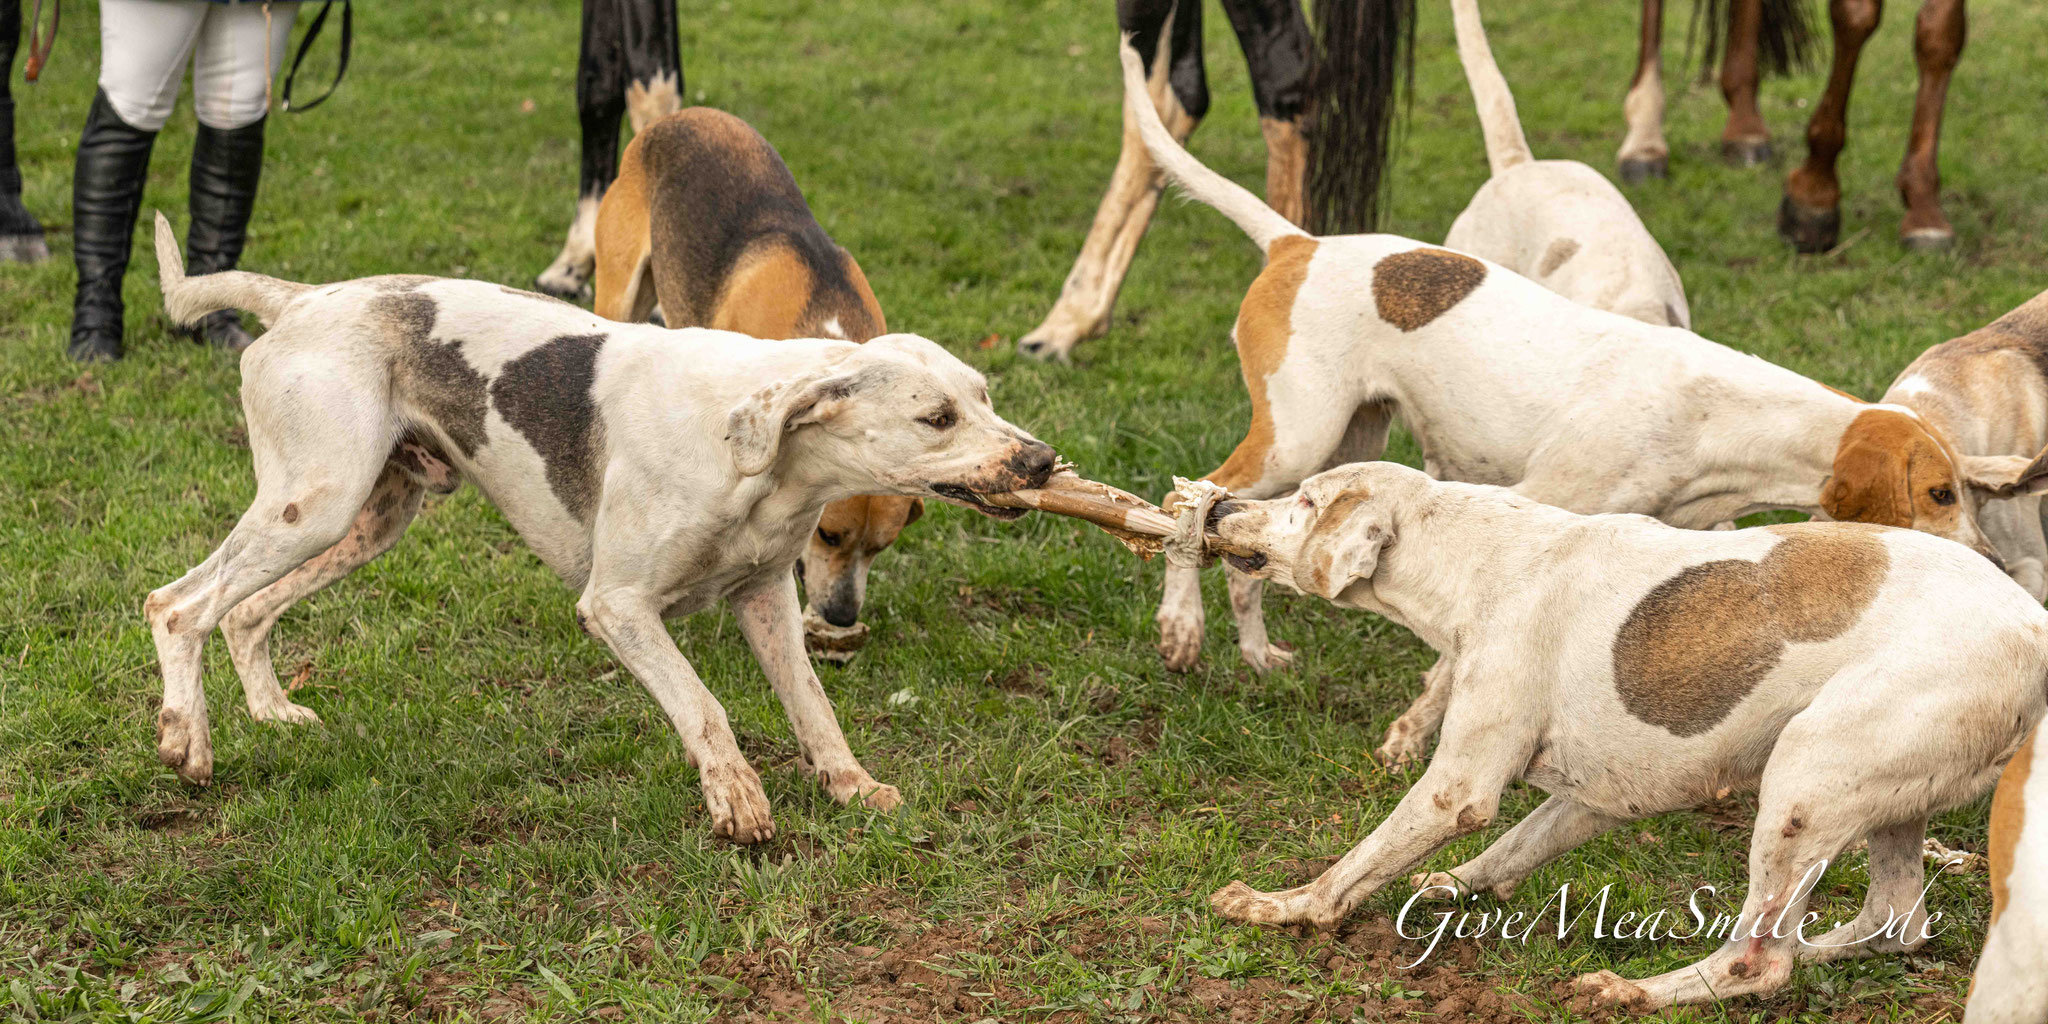 Jagdfotos vom Team @Givemeasmile.de auf der Fotojagd, Peter Jäger #givemeasmilede #taunusmeute #ReitstallRosenhof #Buedingen #jagdreitertage #foxhounds #beagles #jagdreiten #schleppjagd